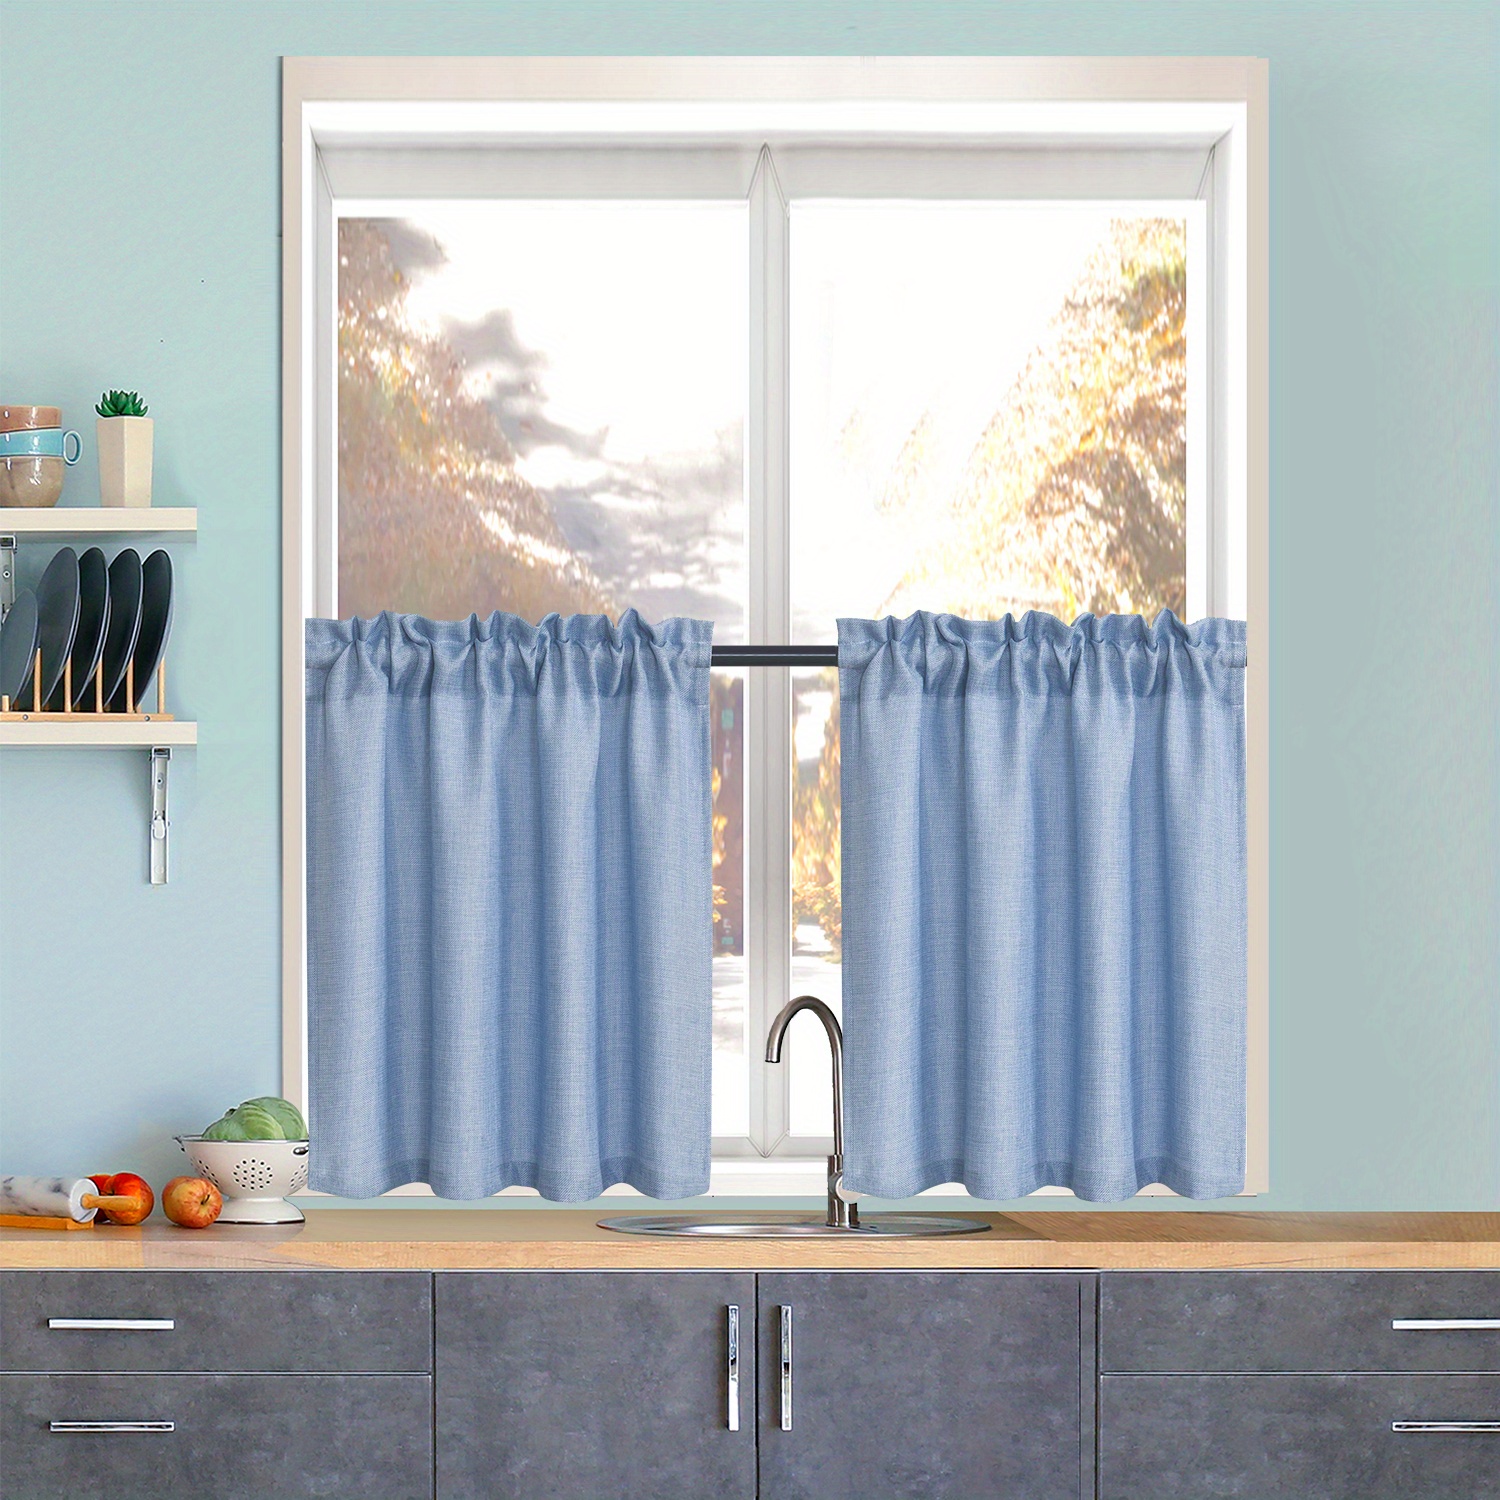 Curtains for windoe in the kitchen - Cortina para ventana en la cocina   Cortinas para cocina pequeña, Ideas de cortinas de cocina, Cortinas para  cocina